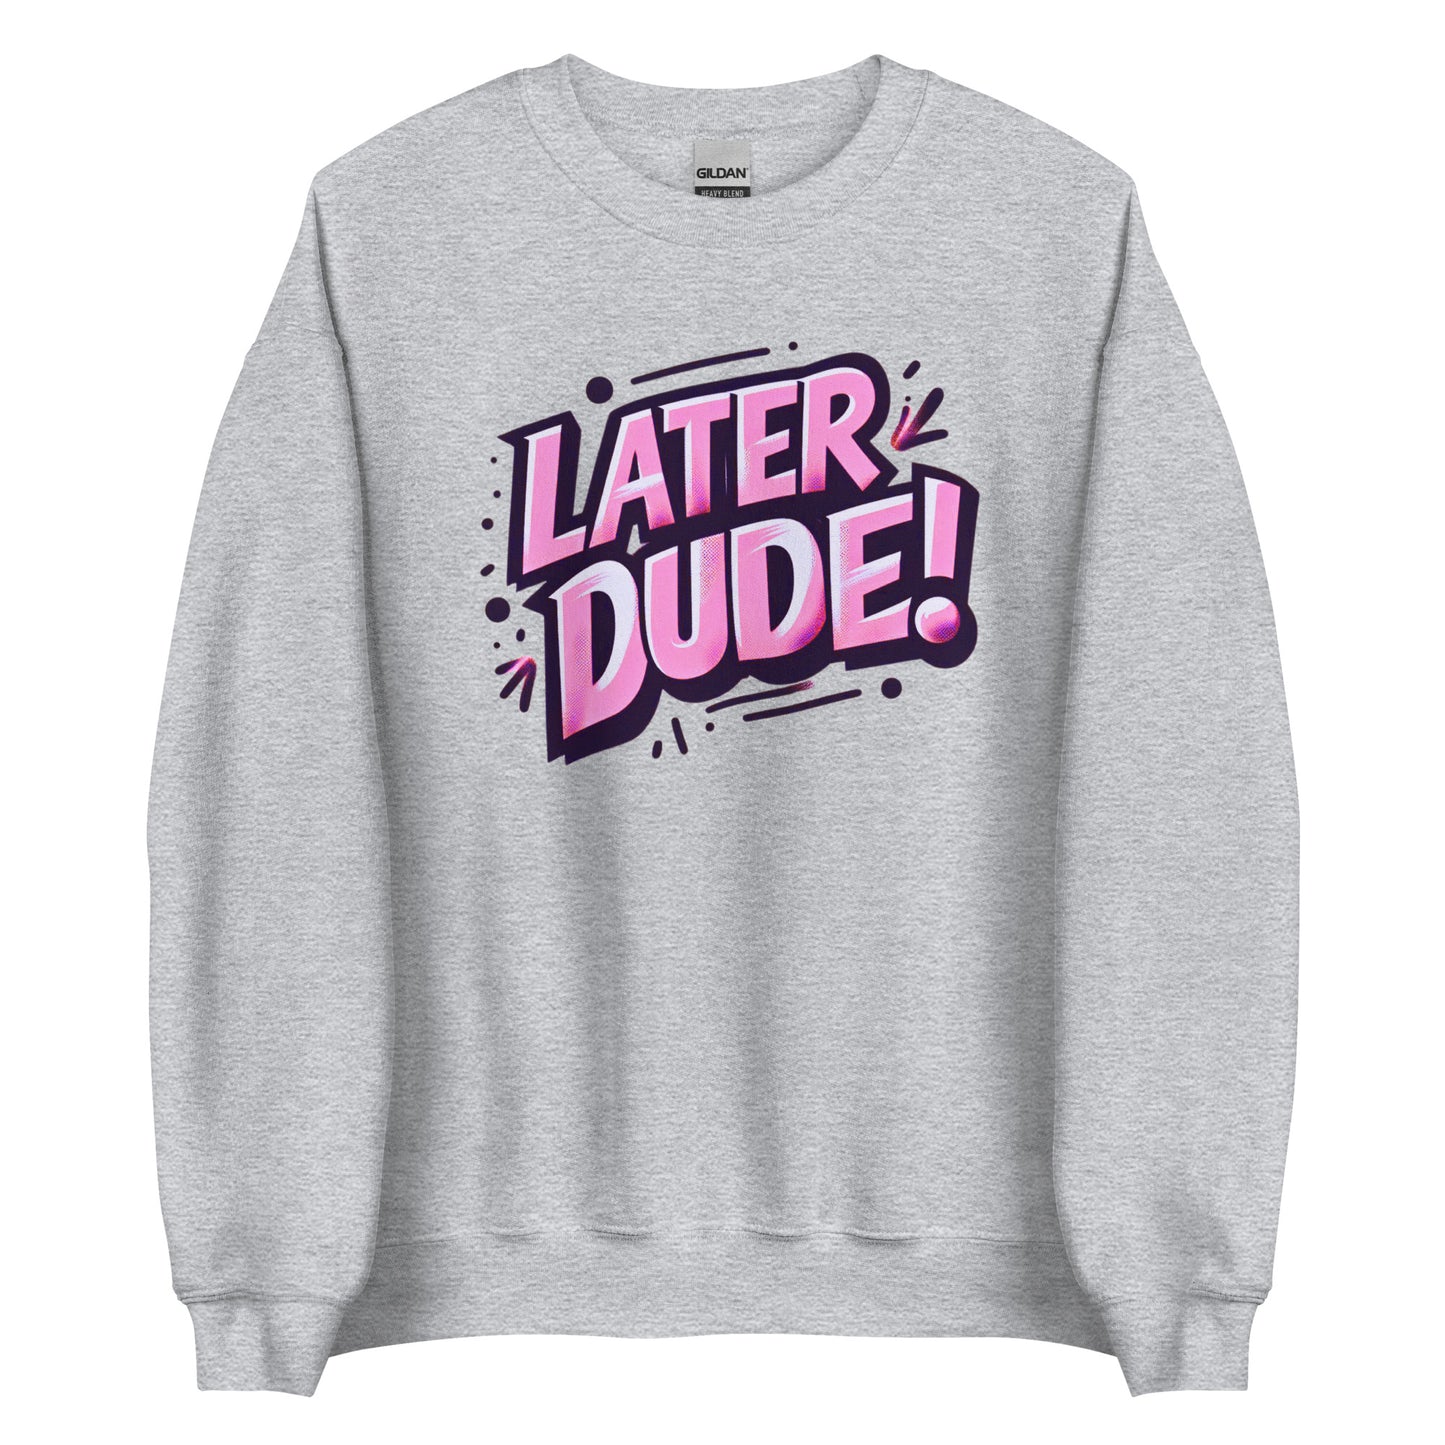 Pink Later Dude Unisex Sweatshirt